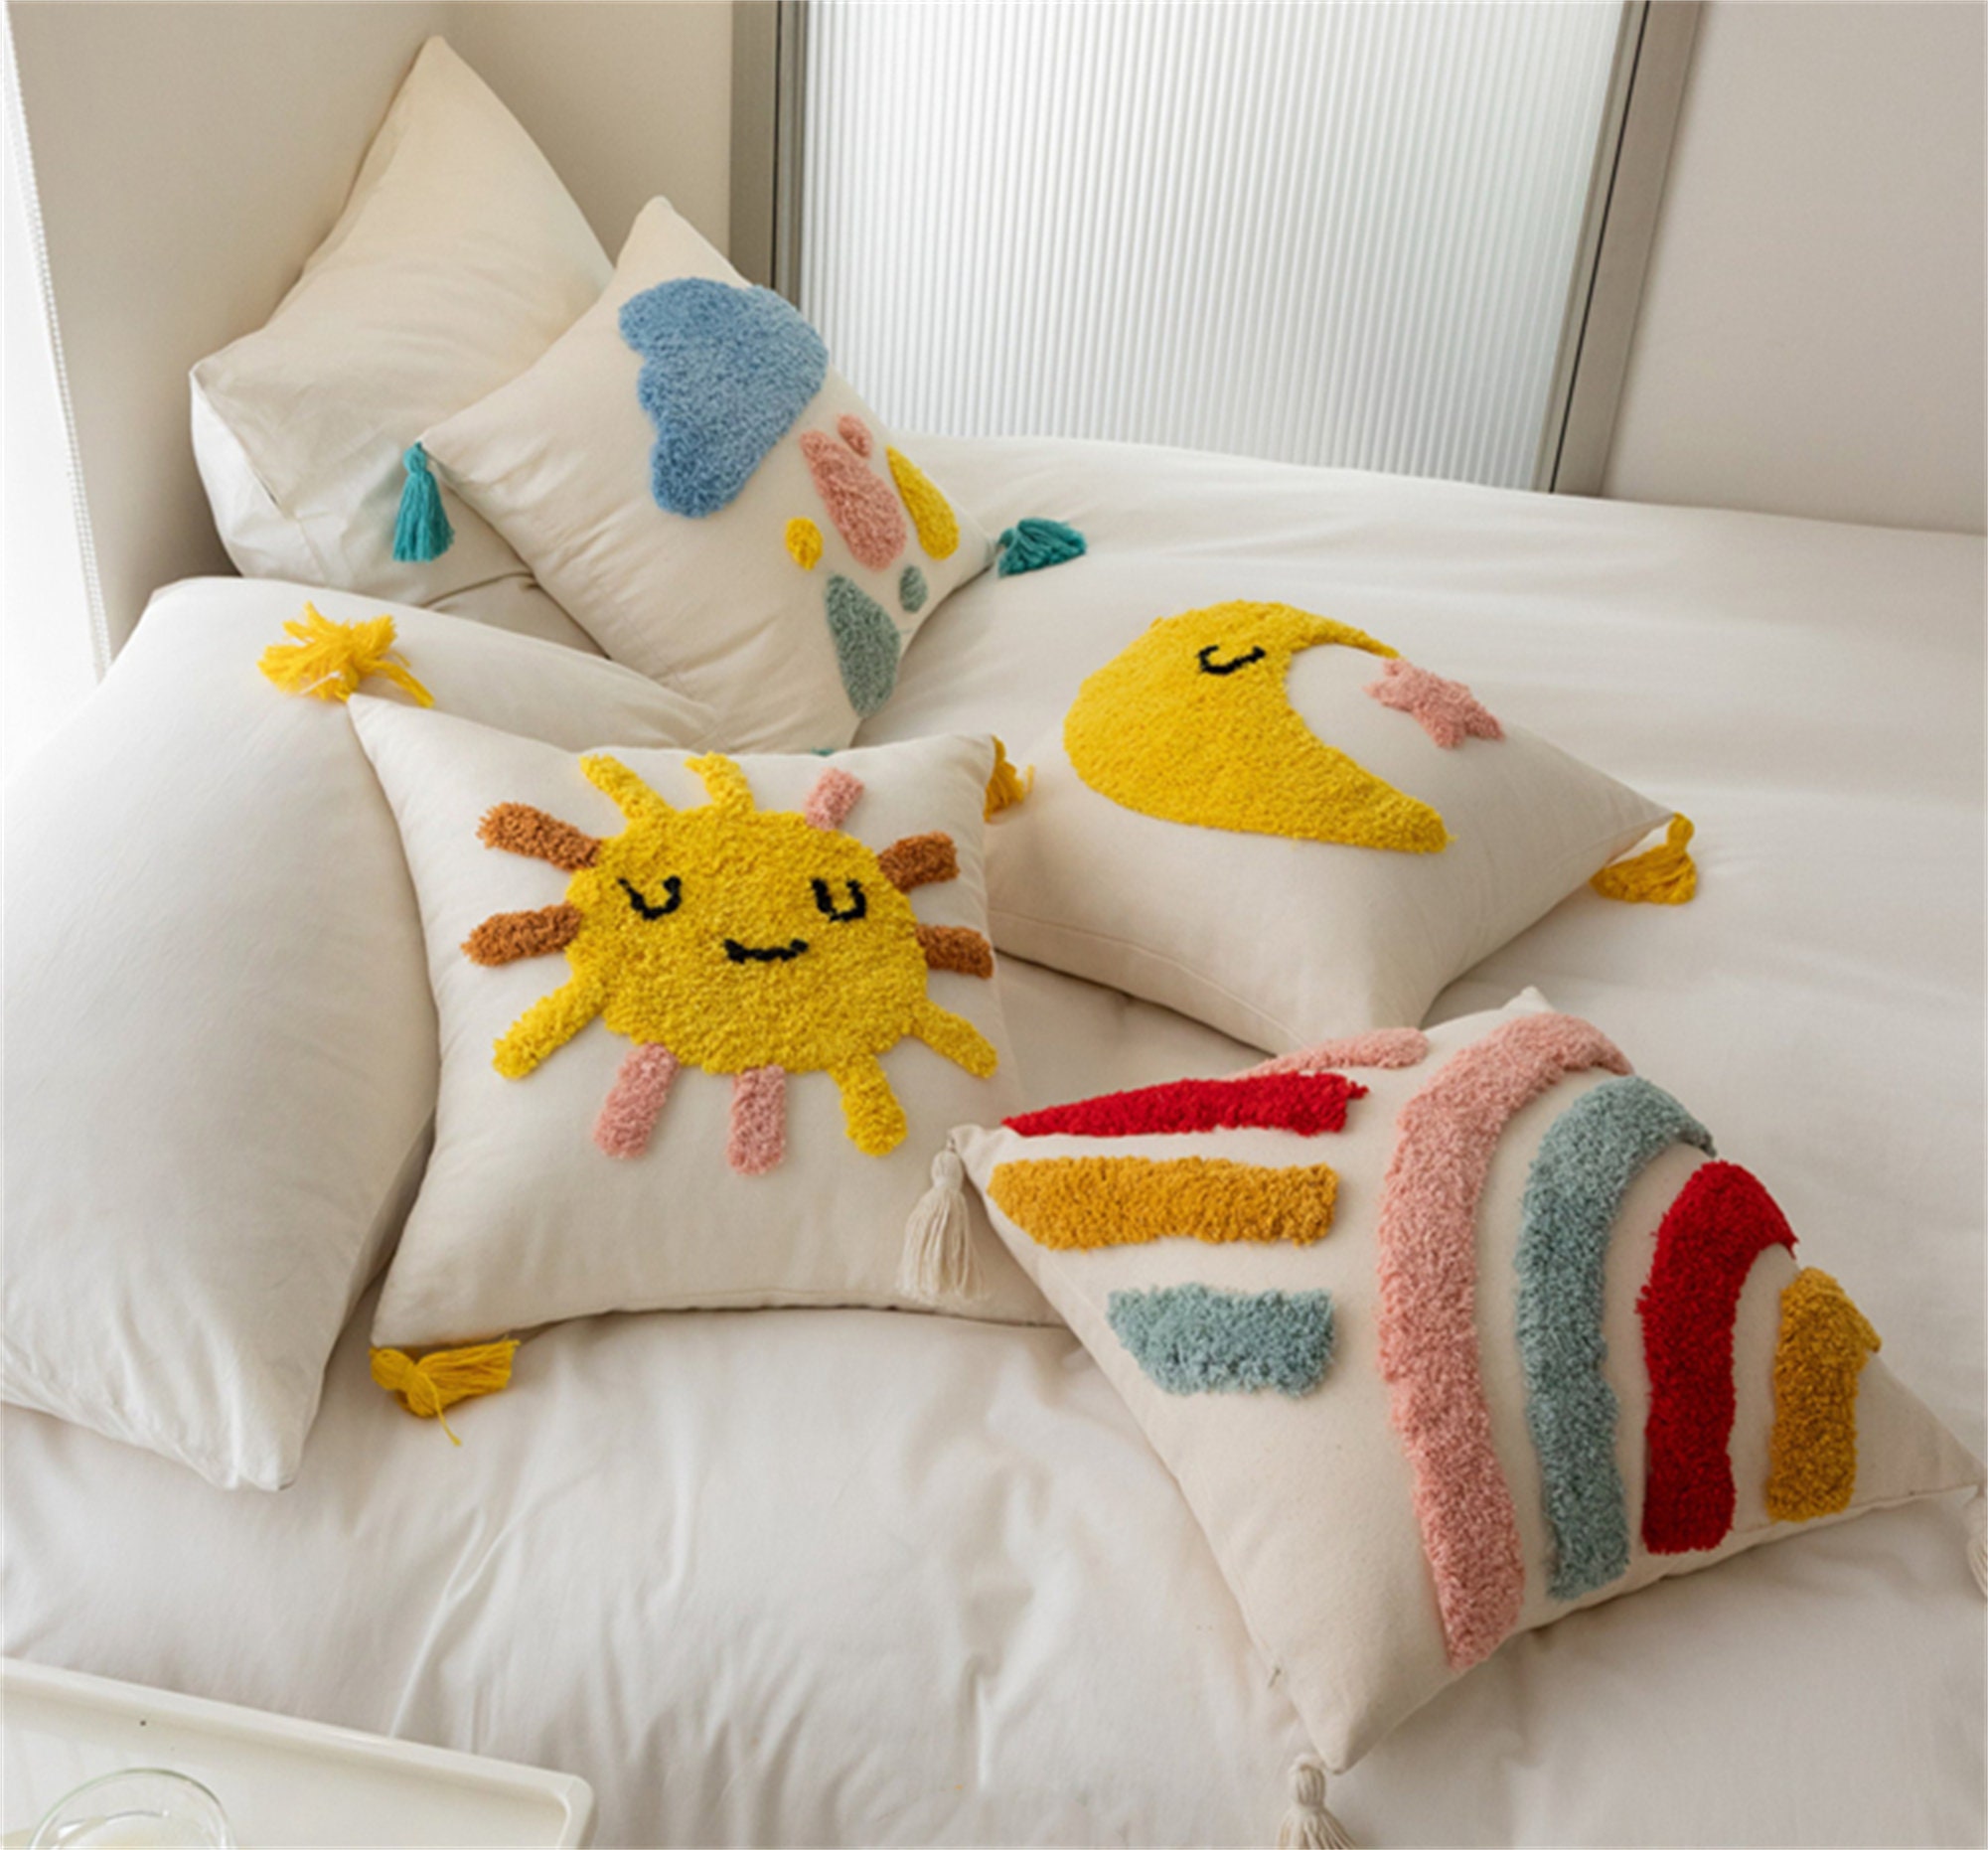  M-Qizi Sun Moon Pillow Covers - Astrology Decor, 18 x